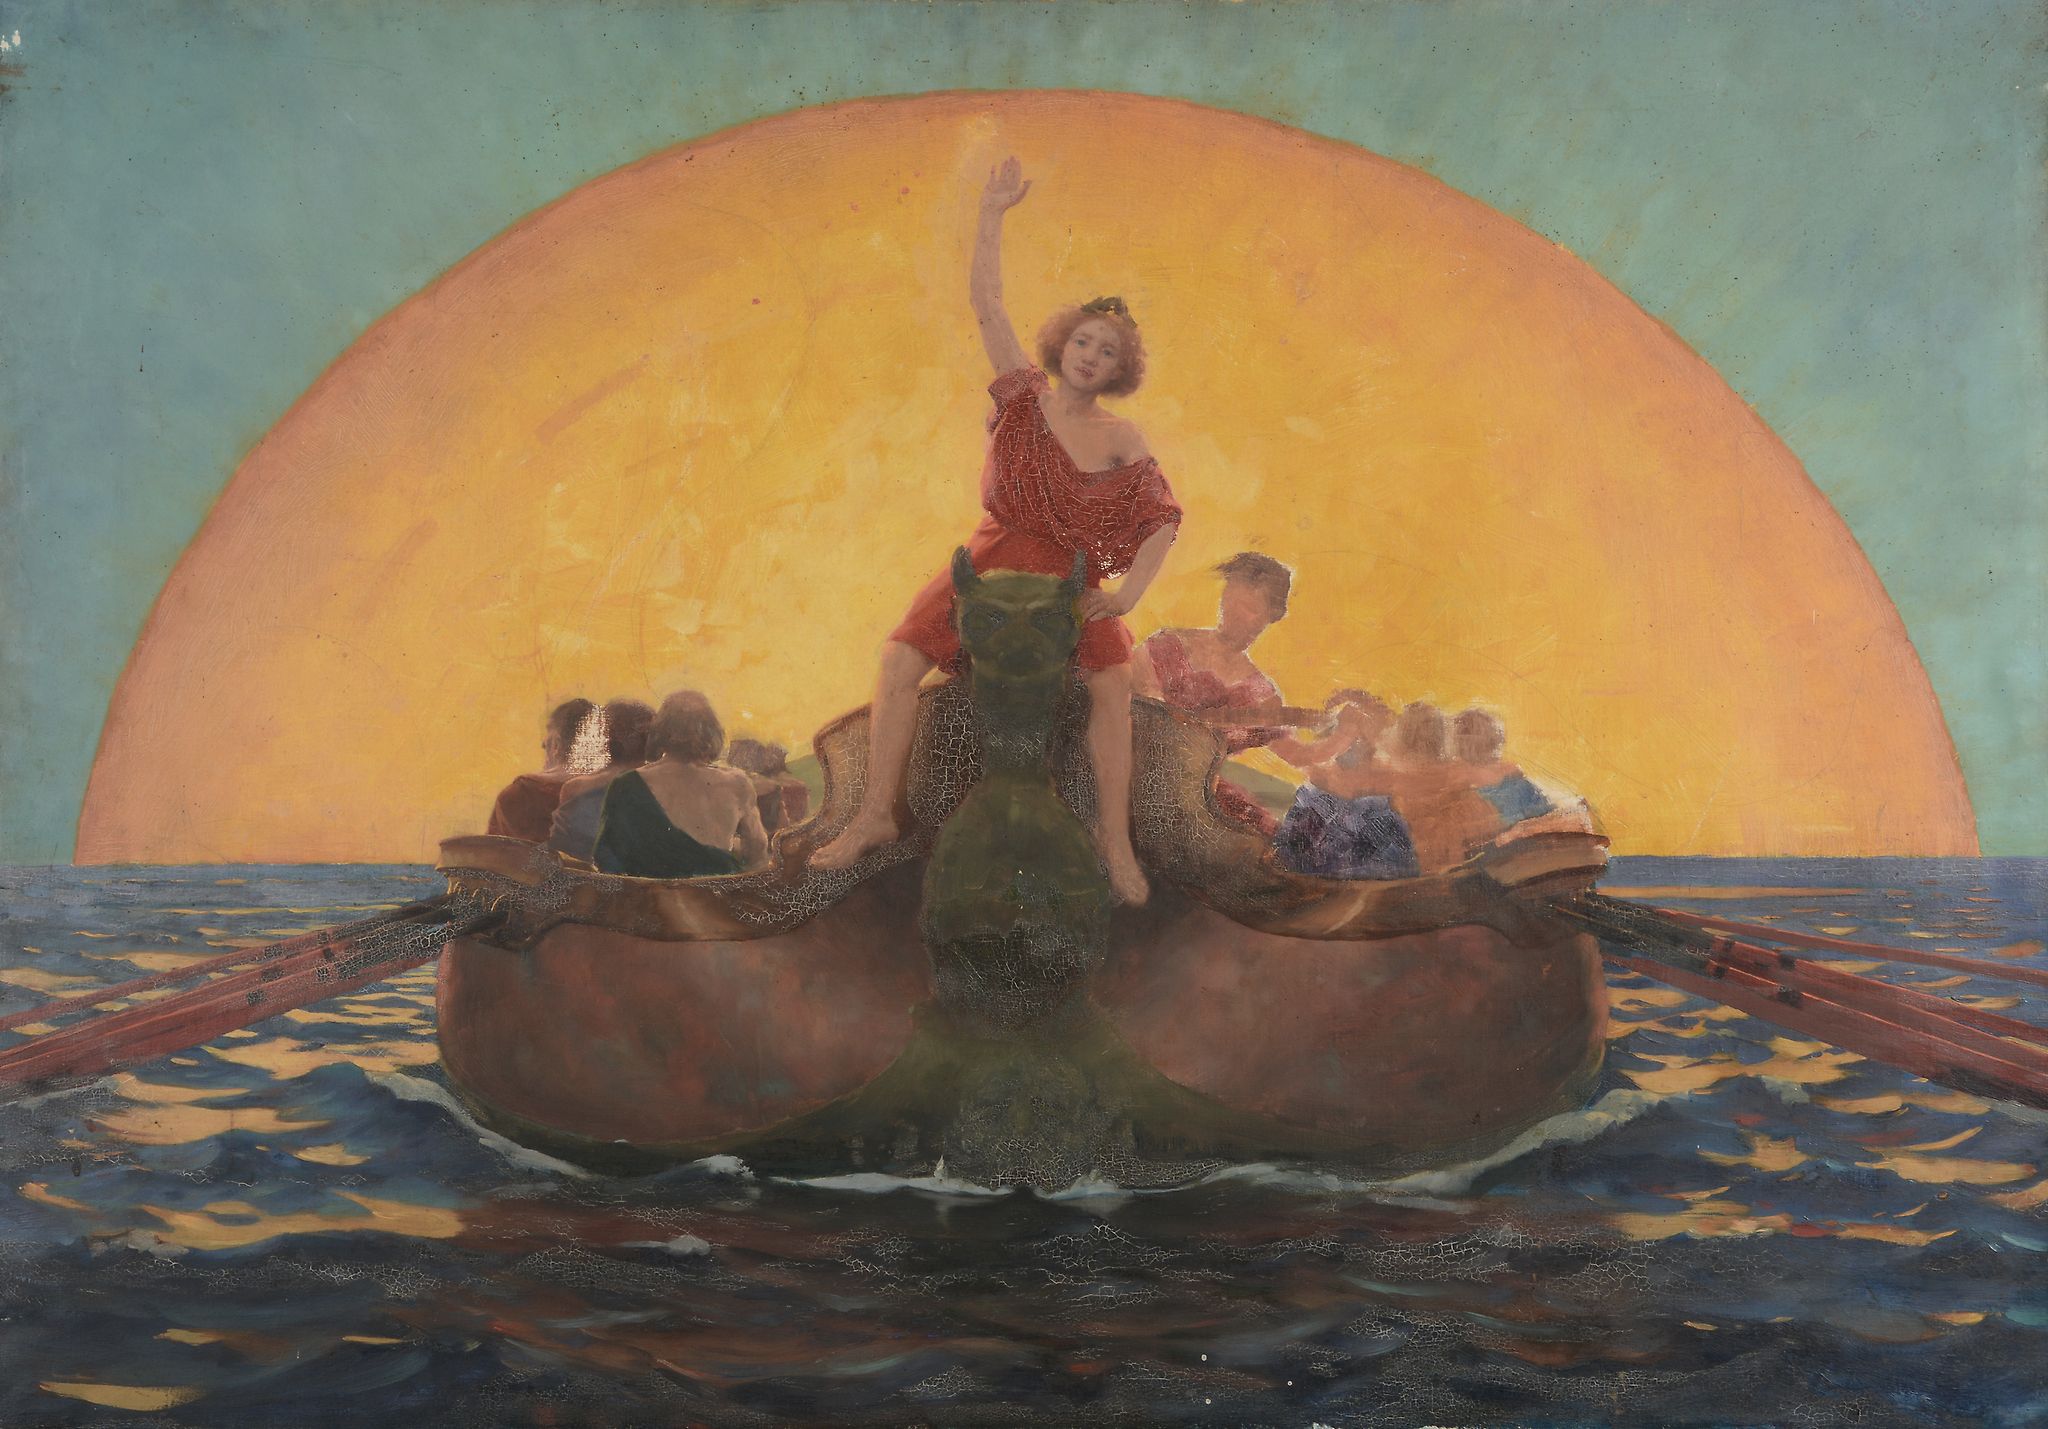 Thomas Cooper Gotch (BRITISH, 1854-1931) - Study for Youth Oil on canvas Unframed 76 x 107 cm (30 x